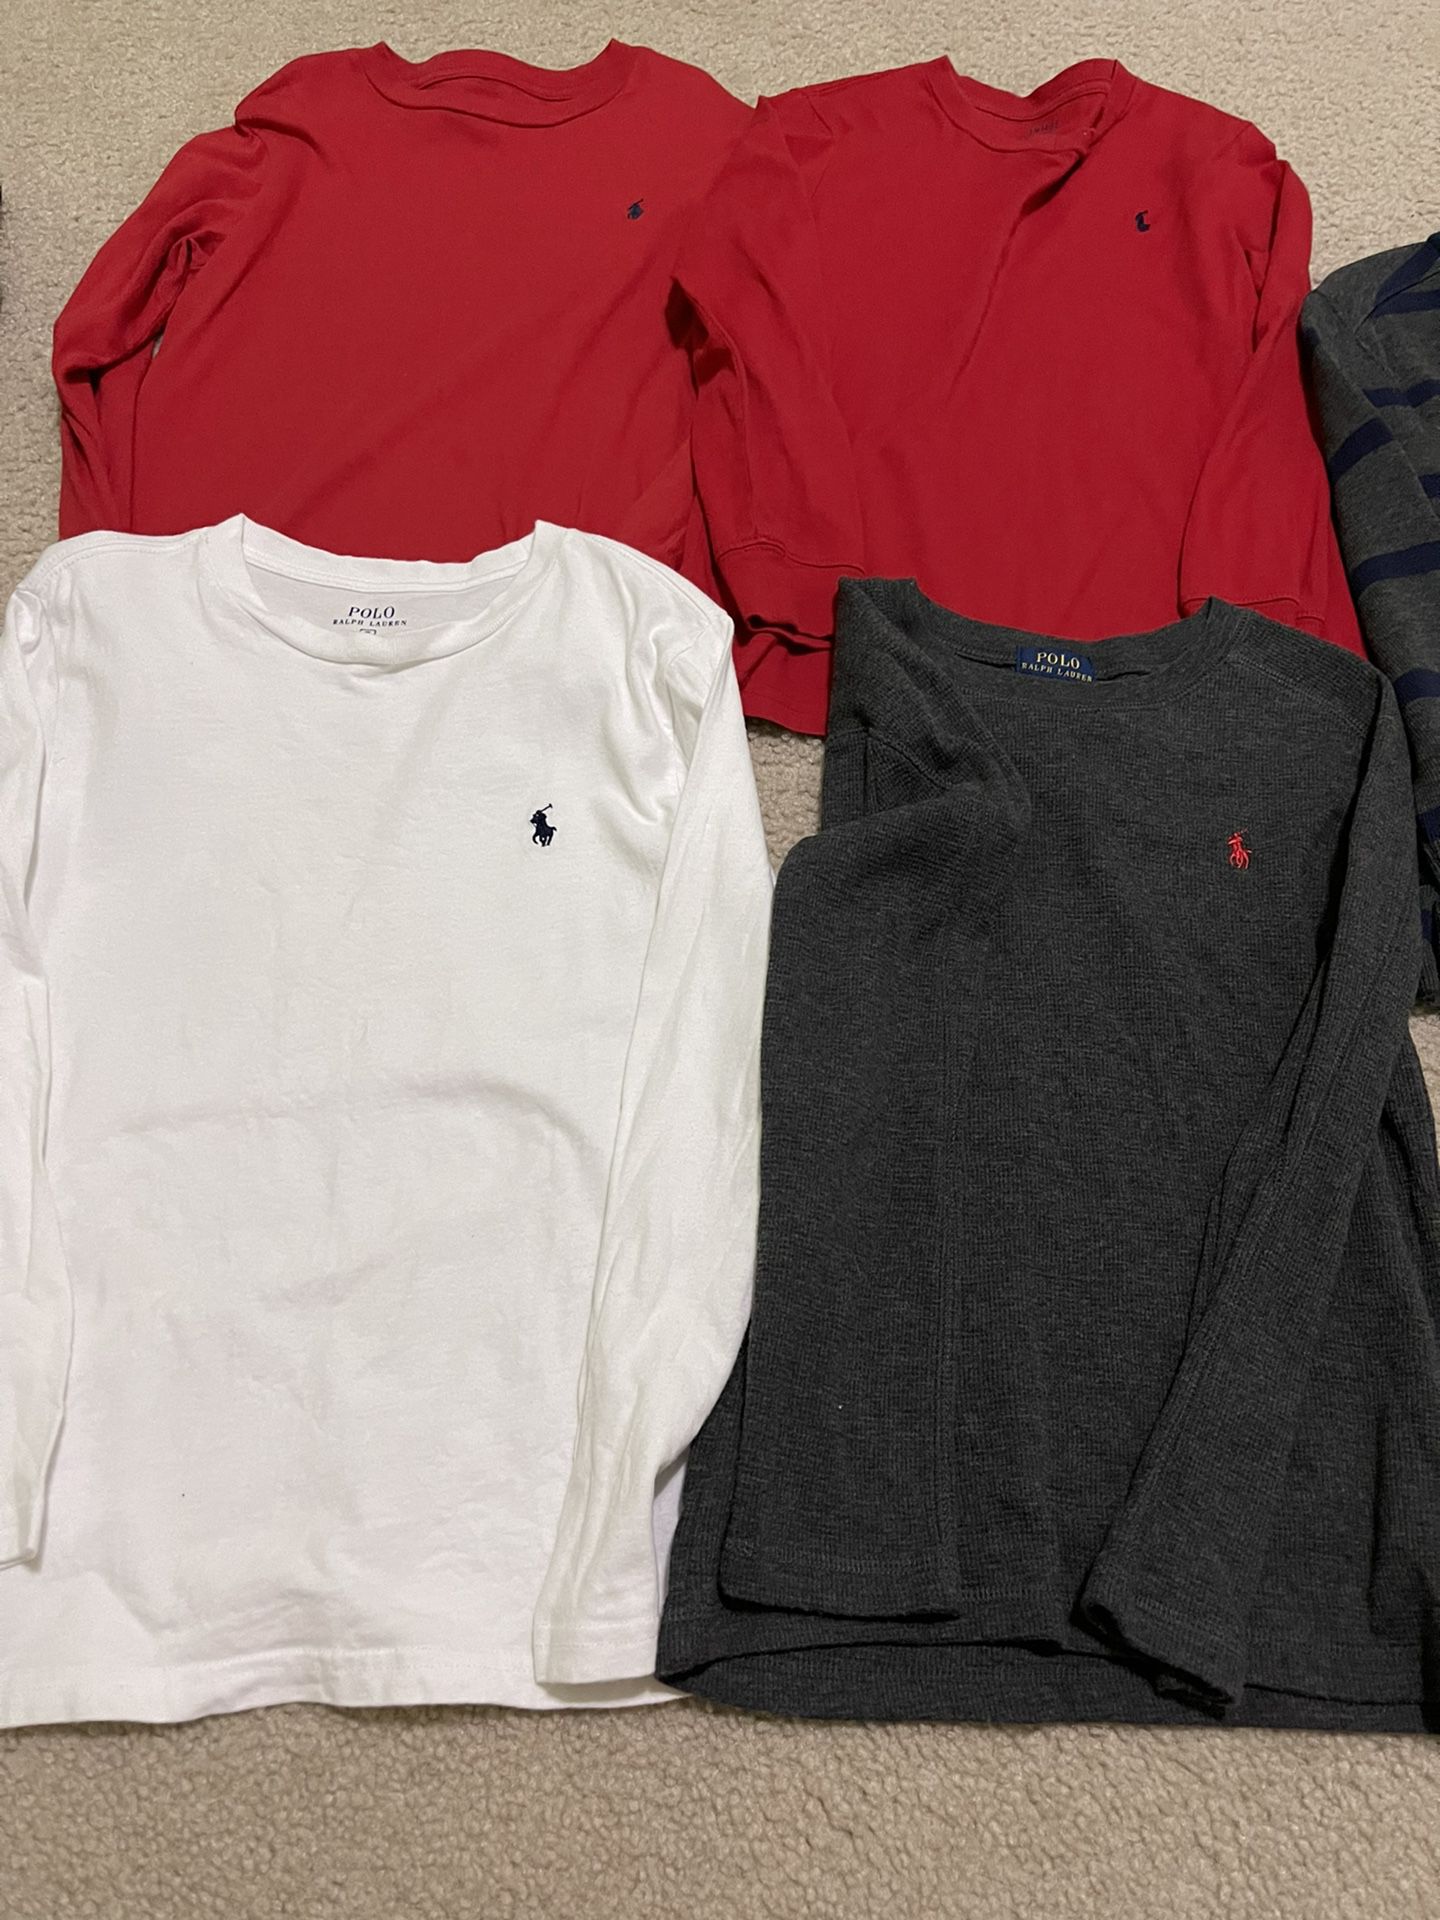 Boys Size 7 Polo Ralph Lauren Shirts 